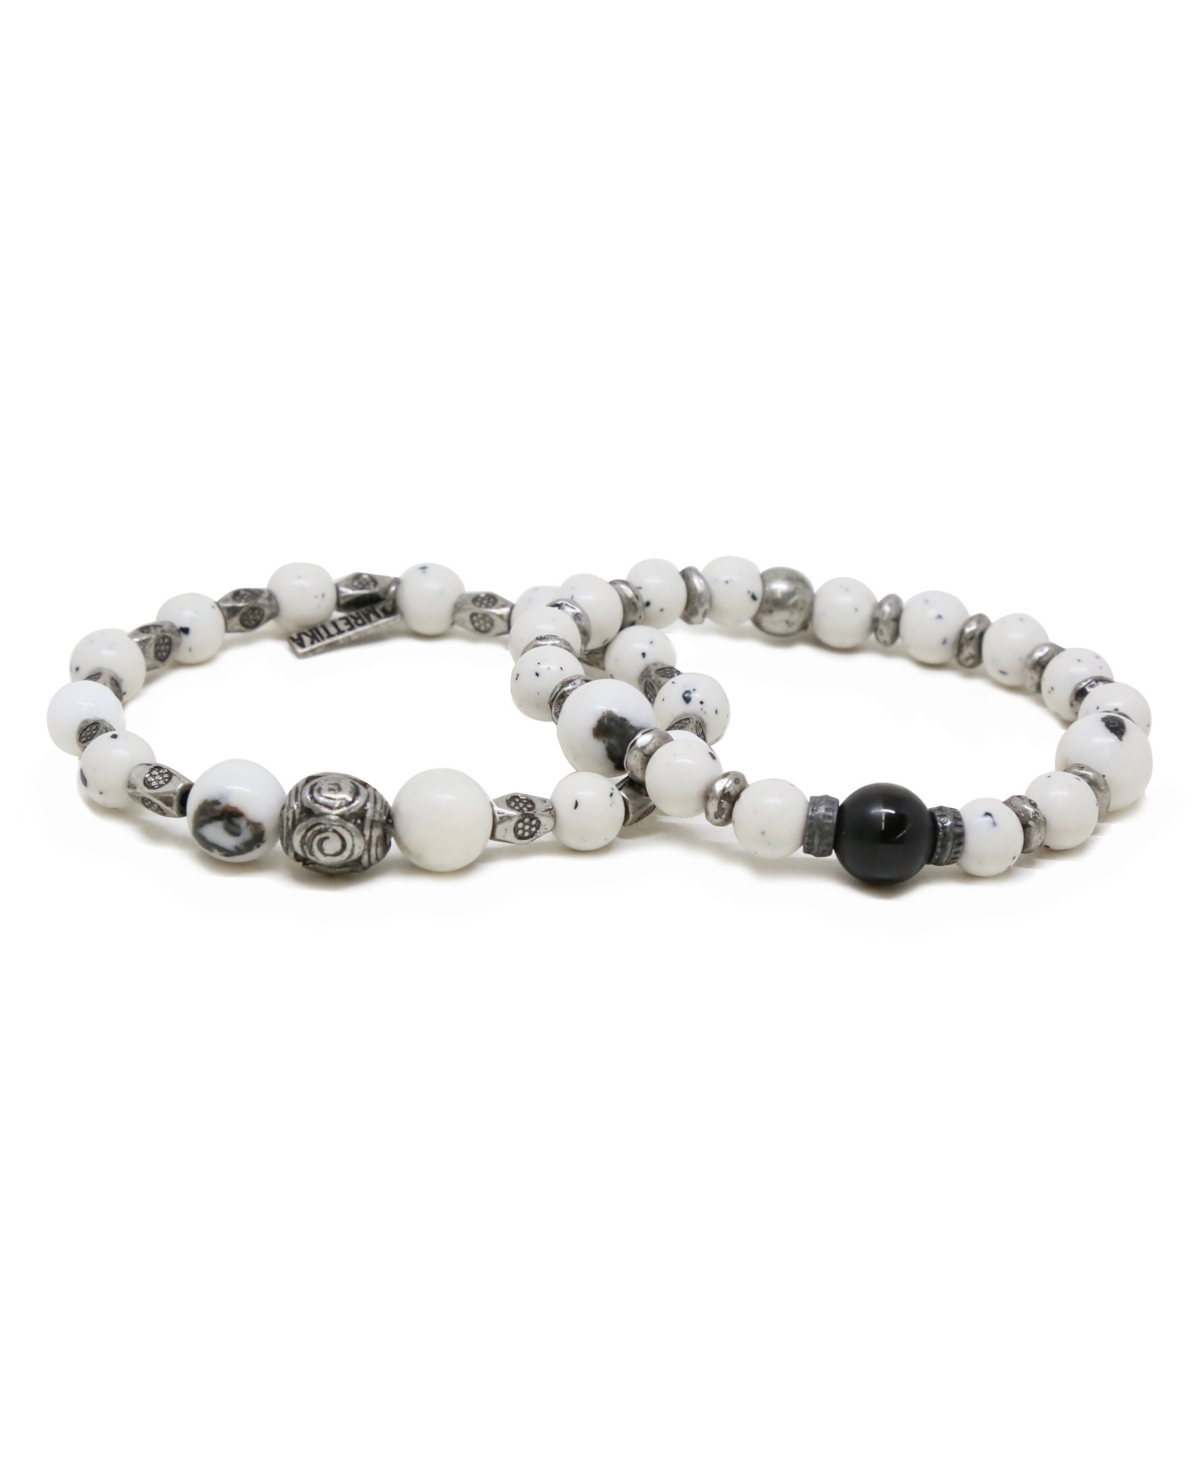 Dalmatian Jade Beaded Bracelet, Pack of 2. - Multi